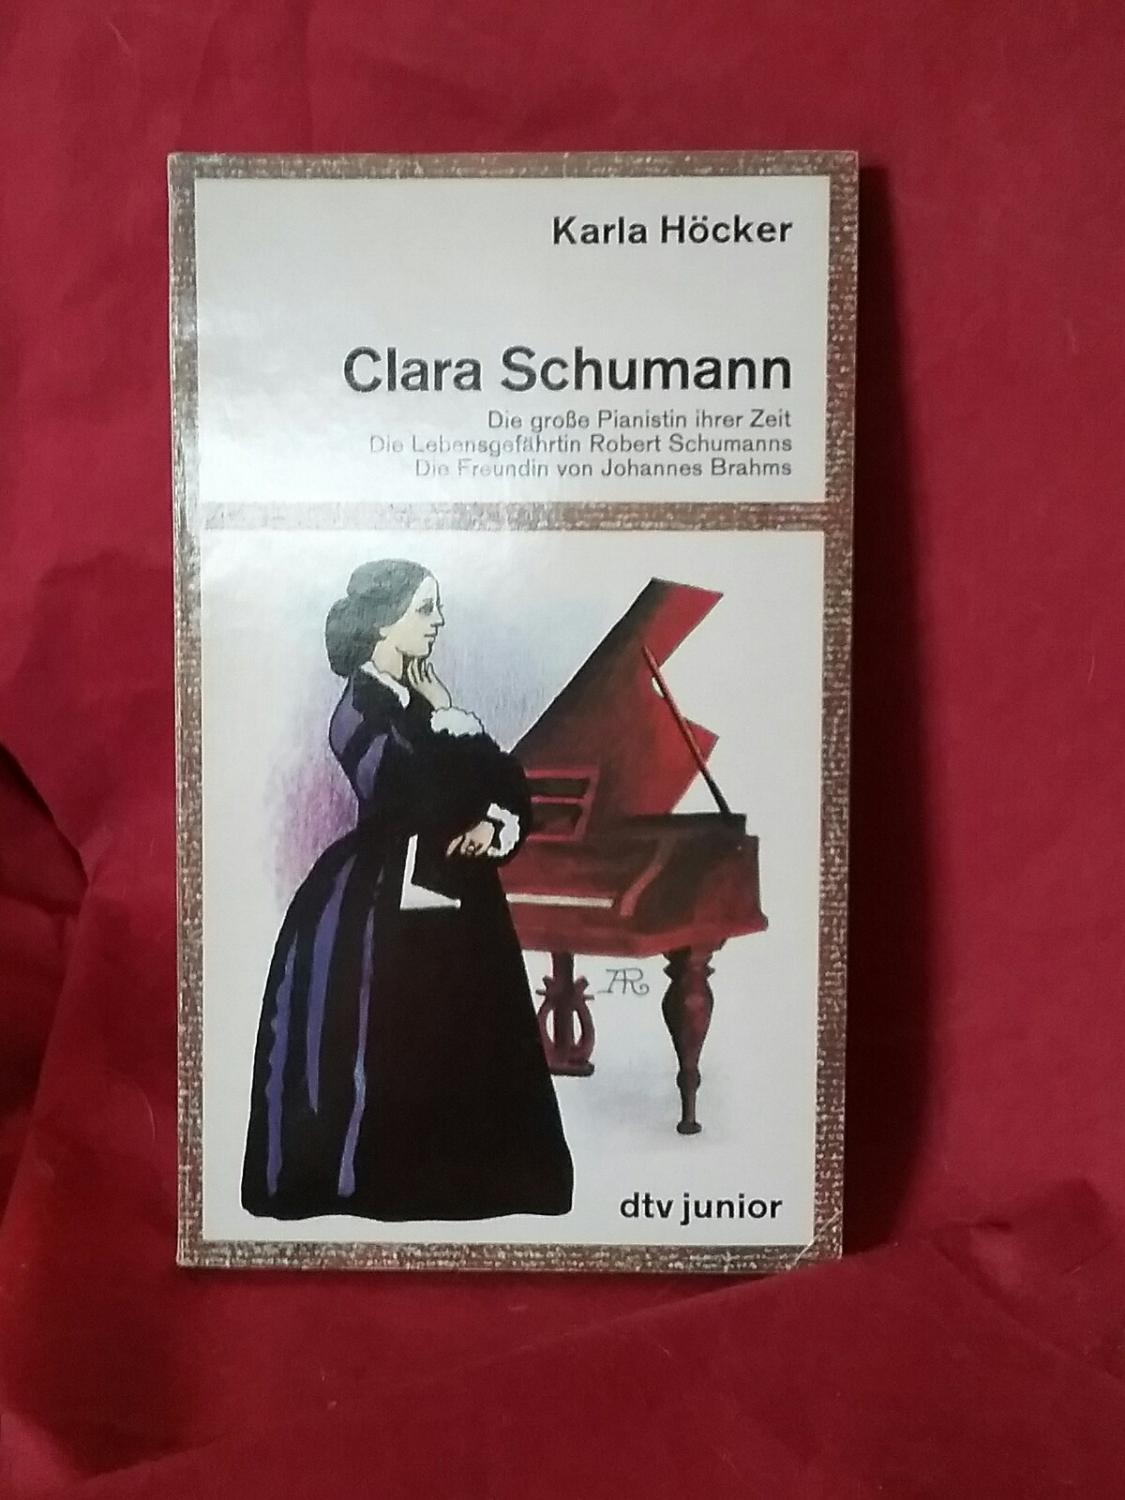 Clara Schumann (5235 510)